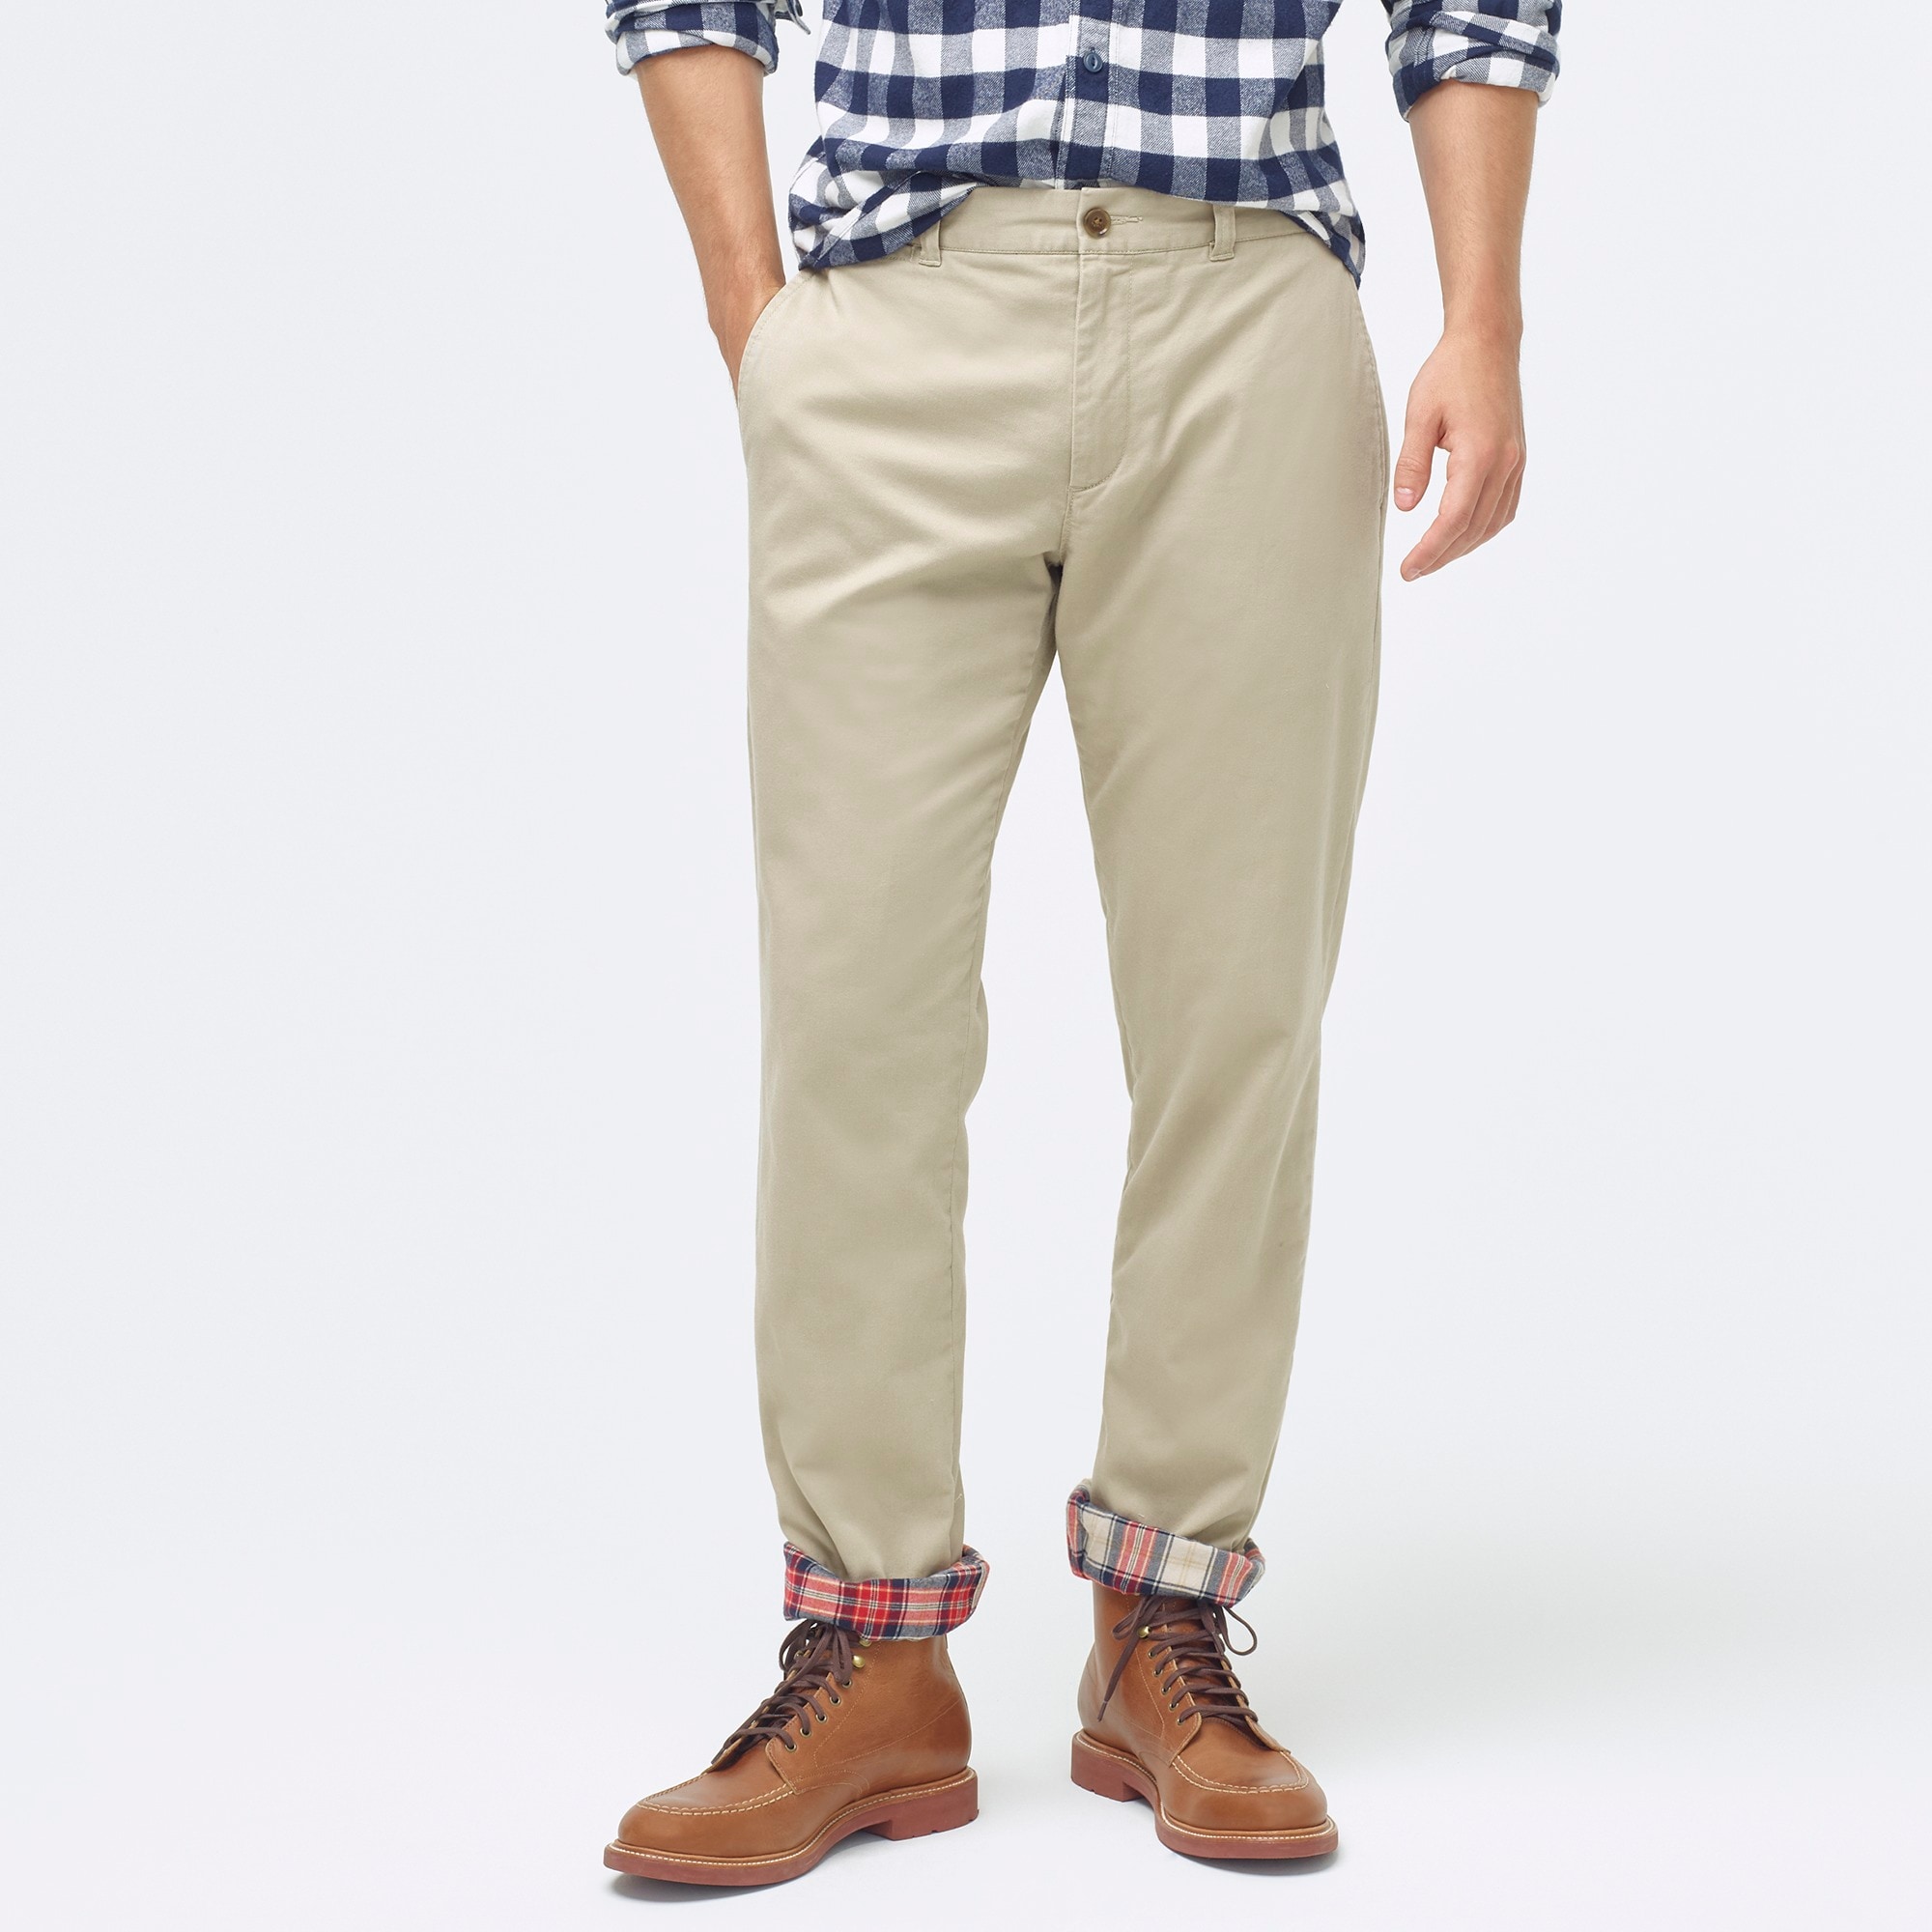 JCrew Factory Flannellined Khaki Pant For Men